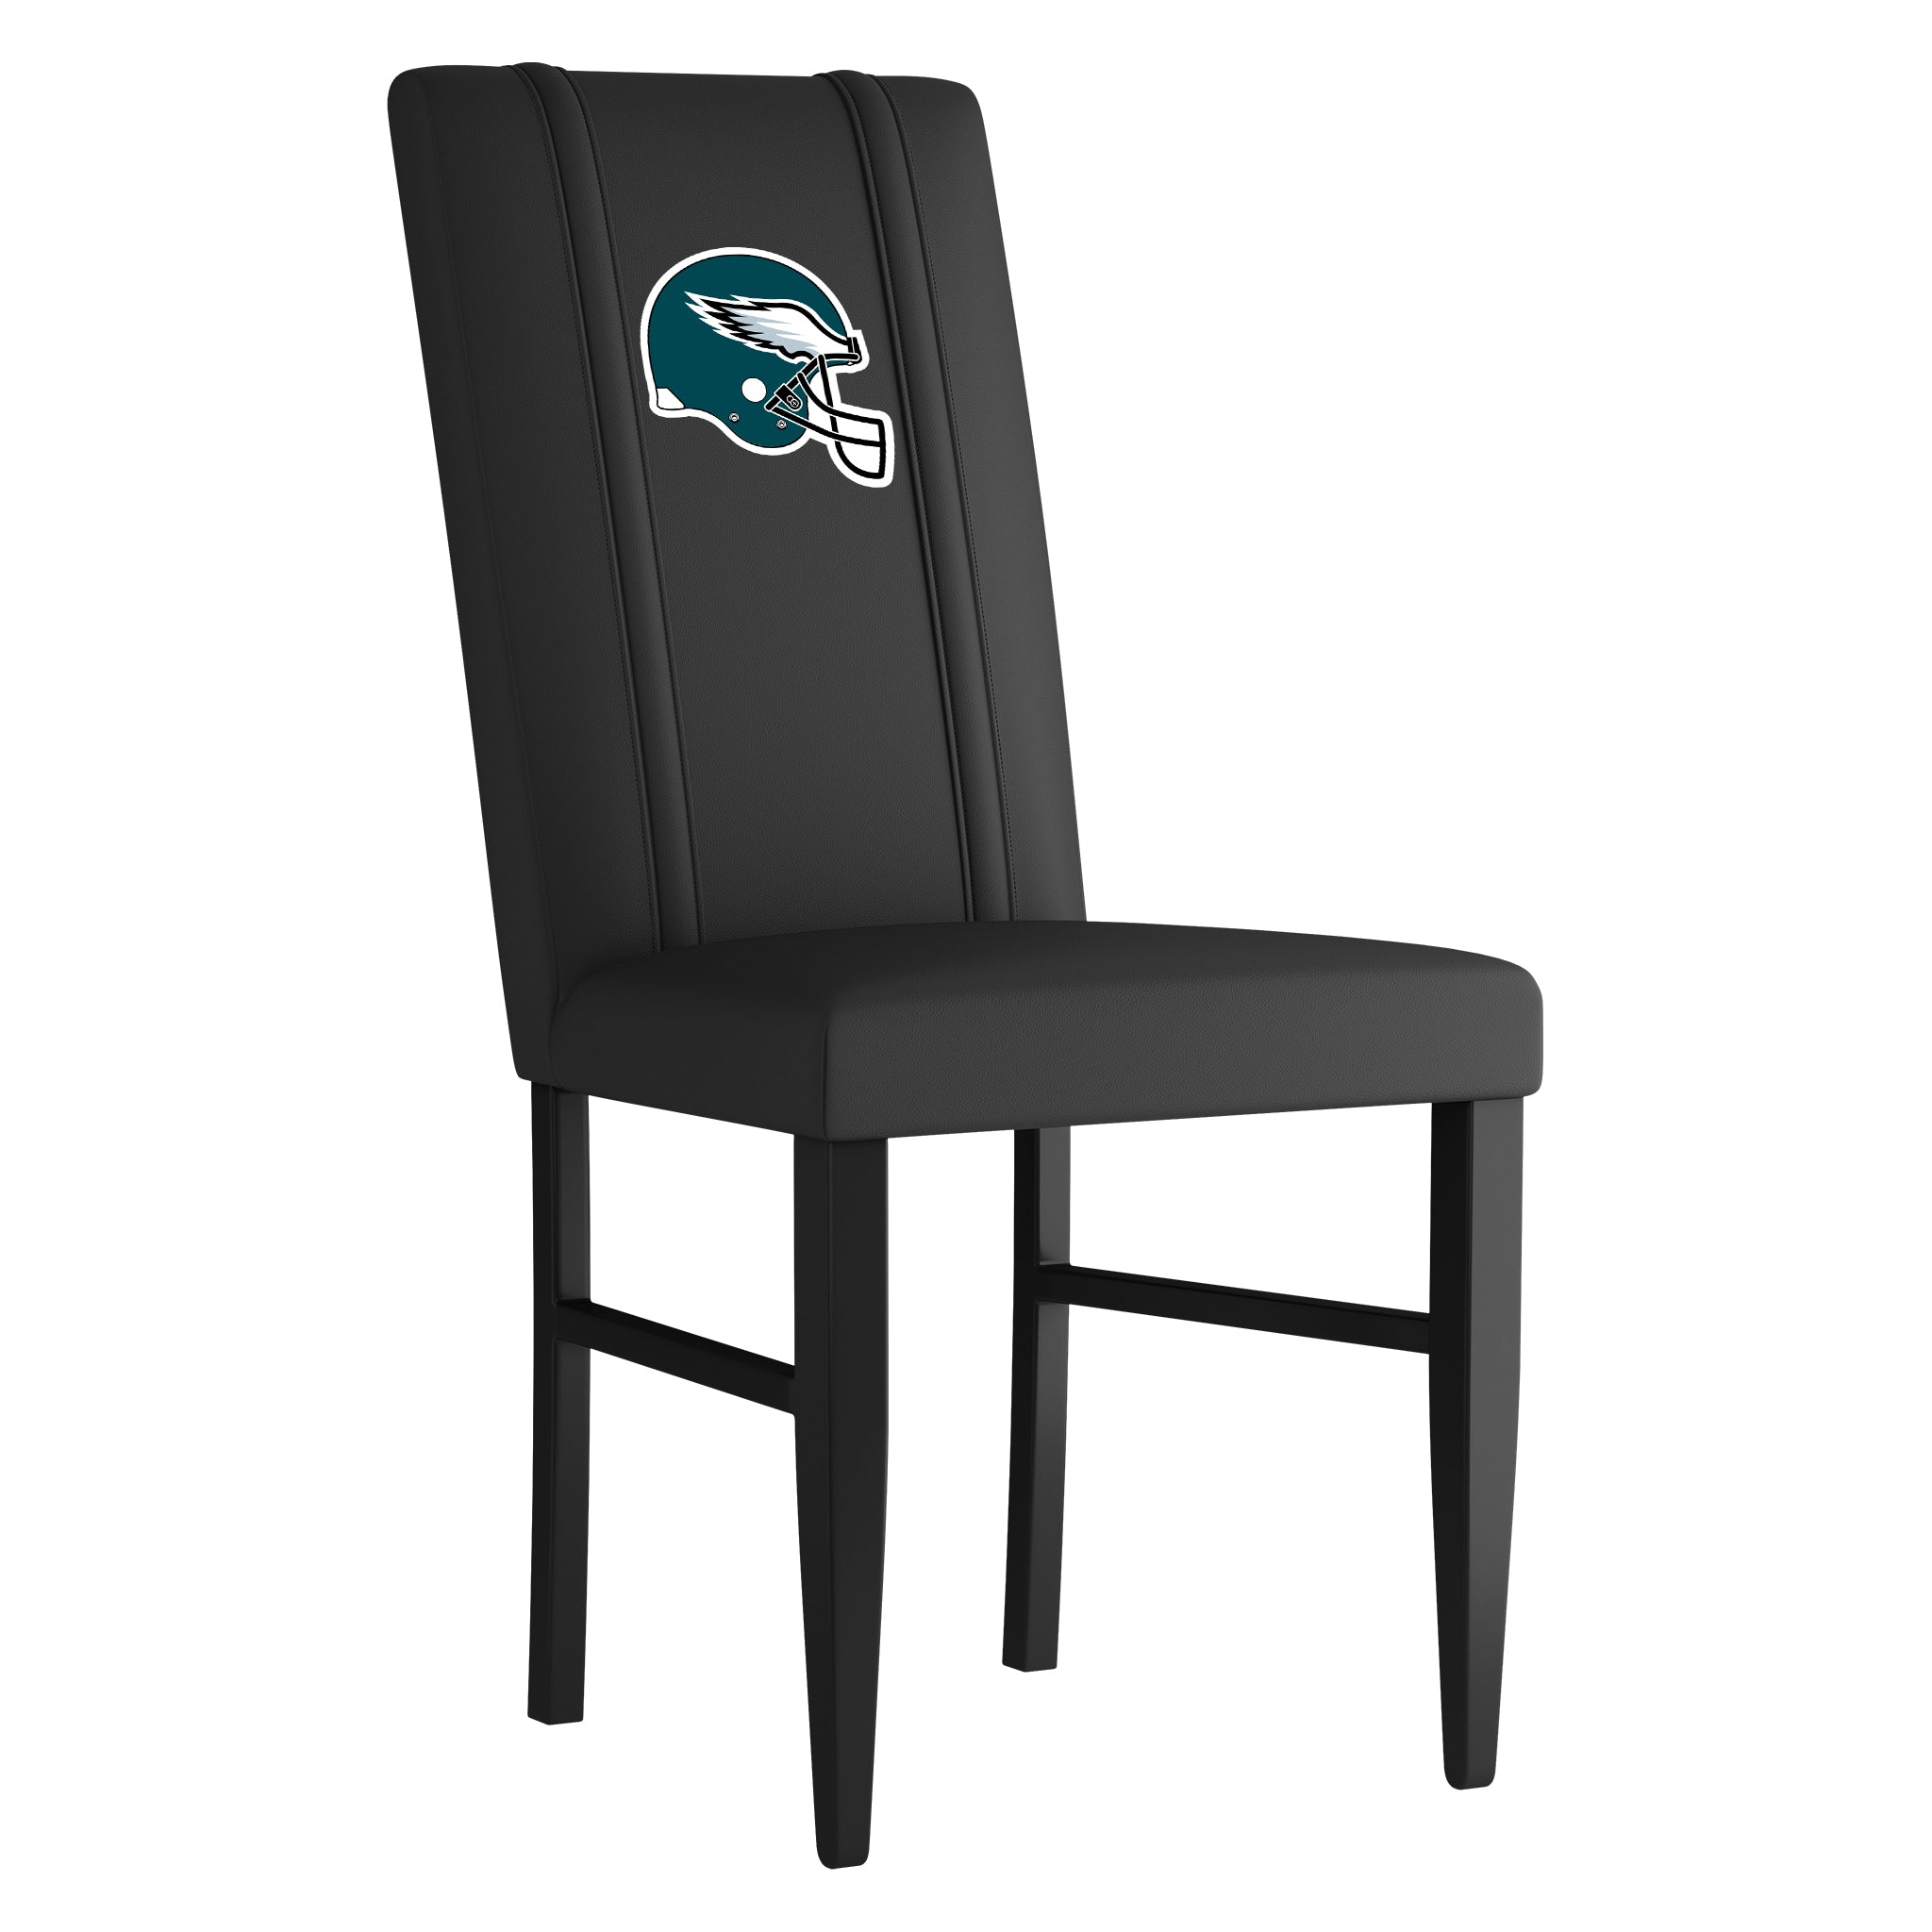 Philadelphia Eagles Side Chair 2000